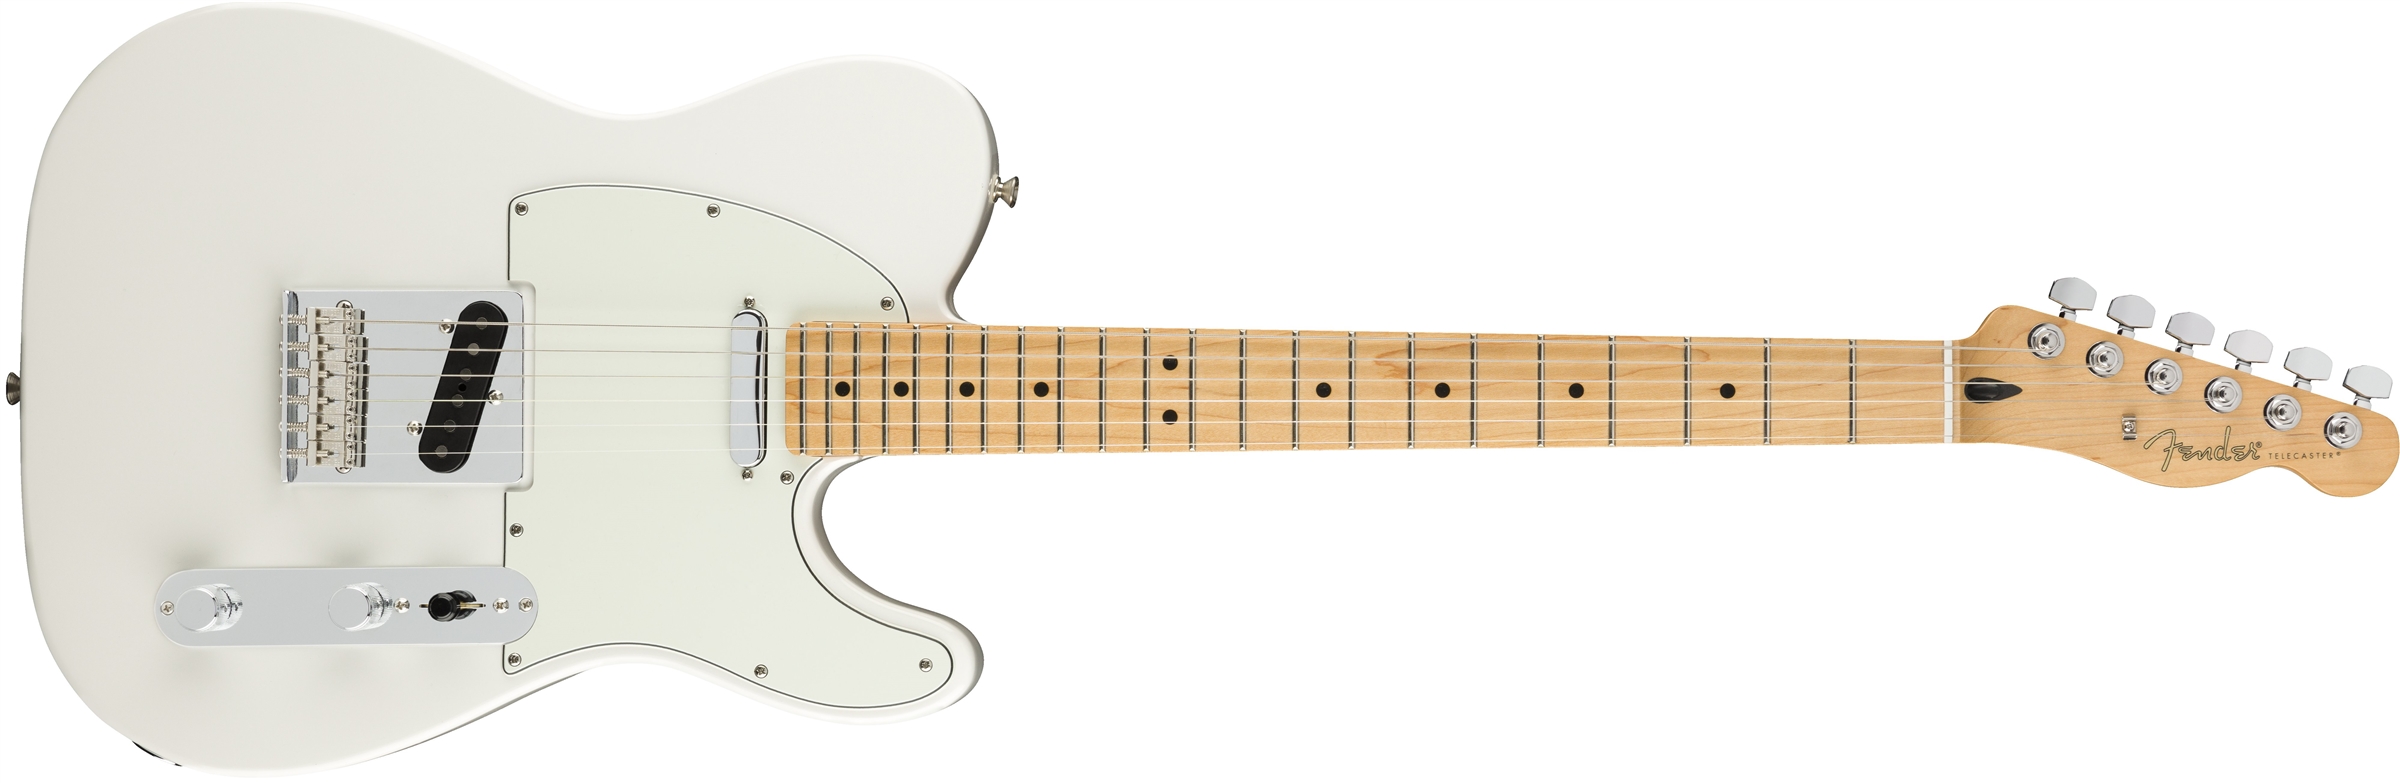 Fender Tele Player Mex Mn - Polar White - Guitarra eléctrica con forma de tel - Variation 1